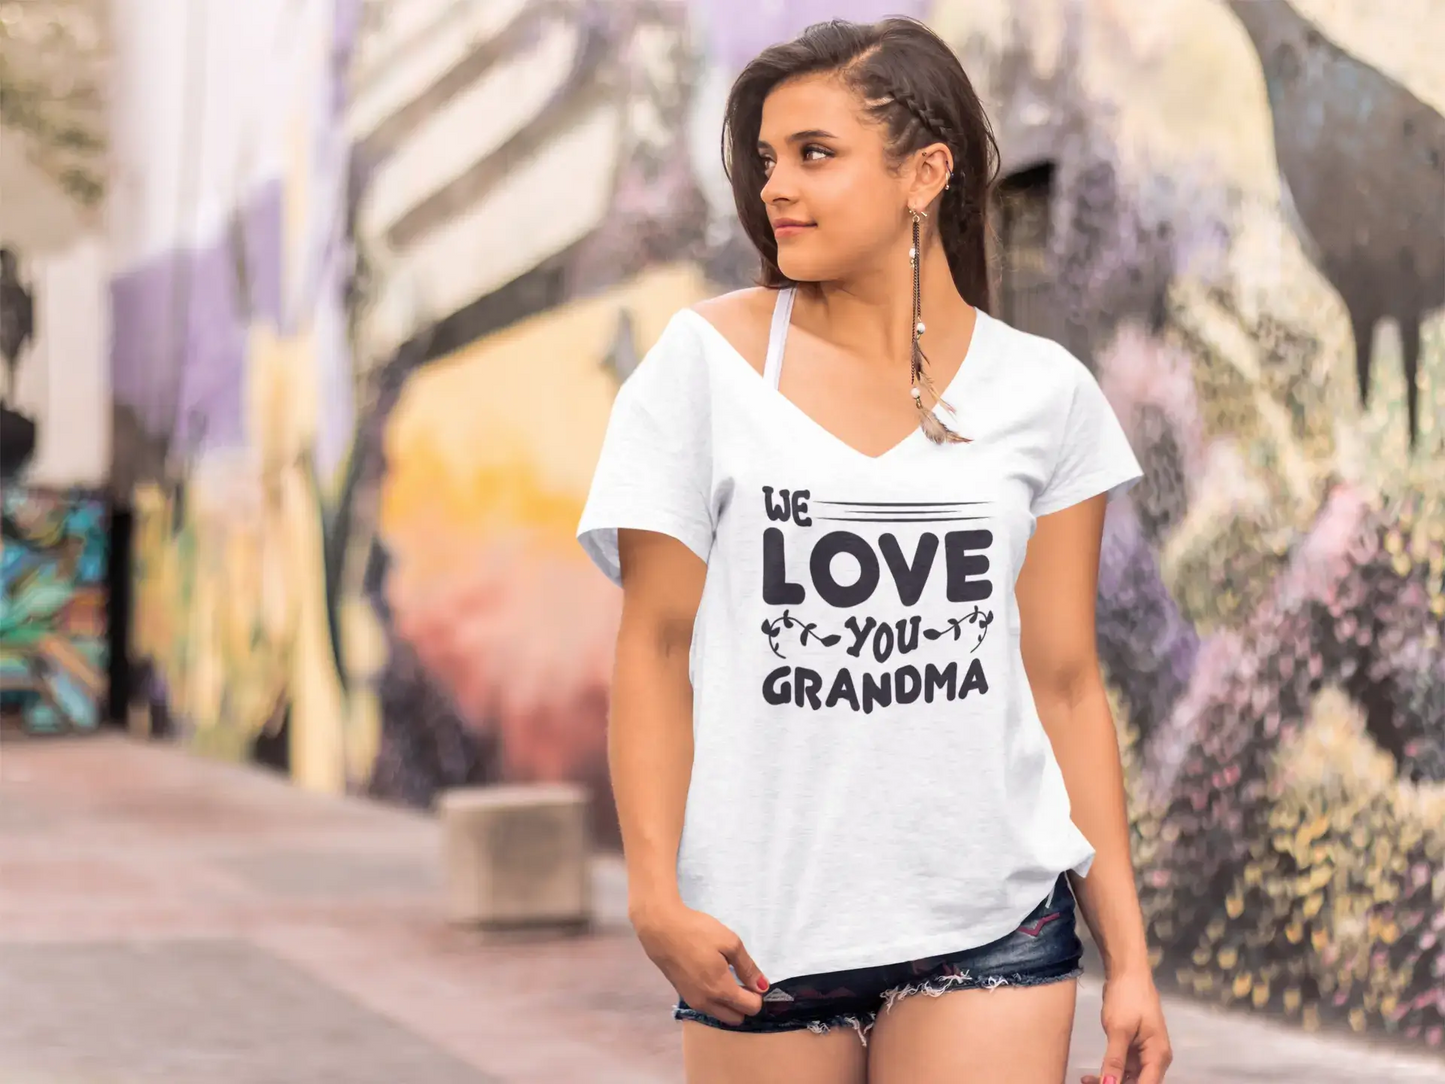 ULTRABASIC Women's T-Shirt We Love You Grandma - Short Sleeve Tee Shirt Tops